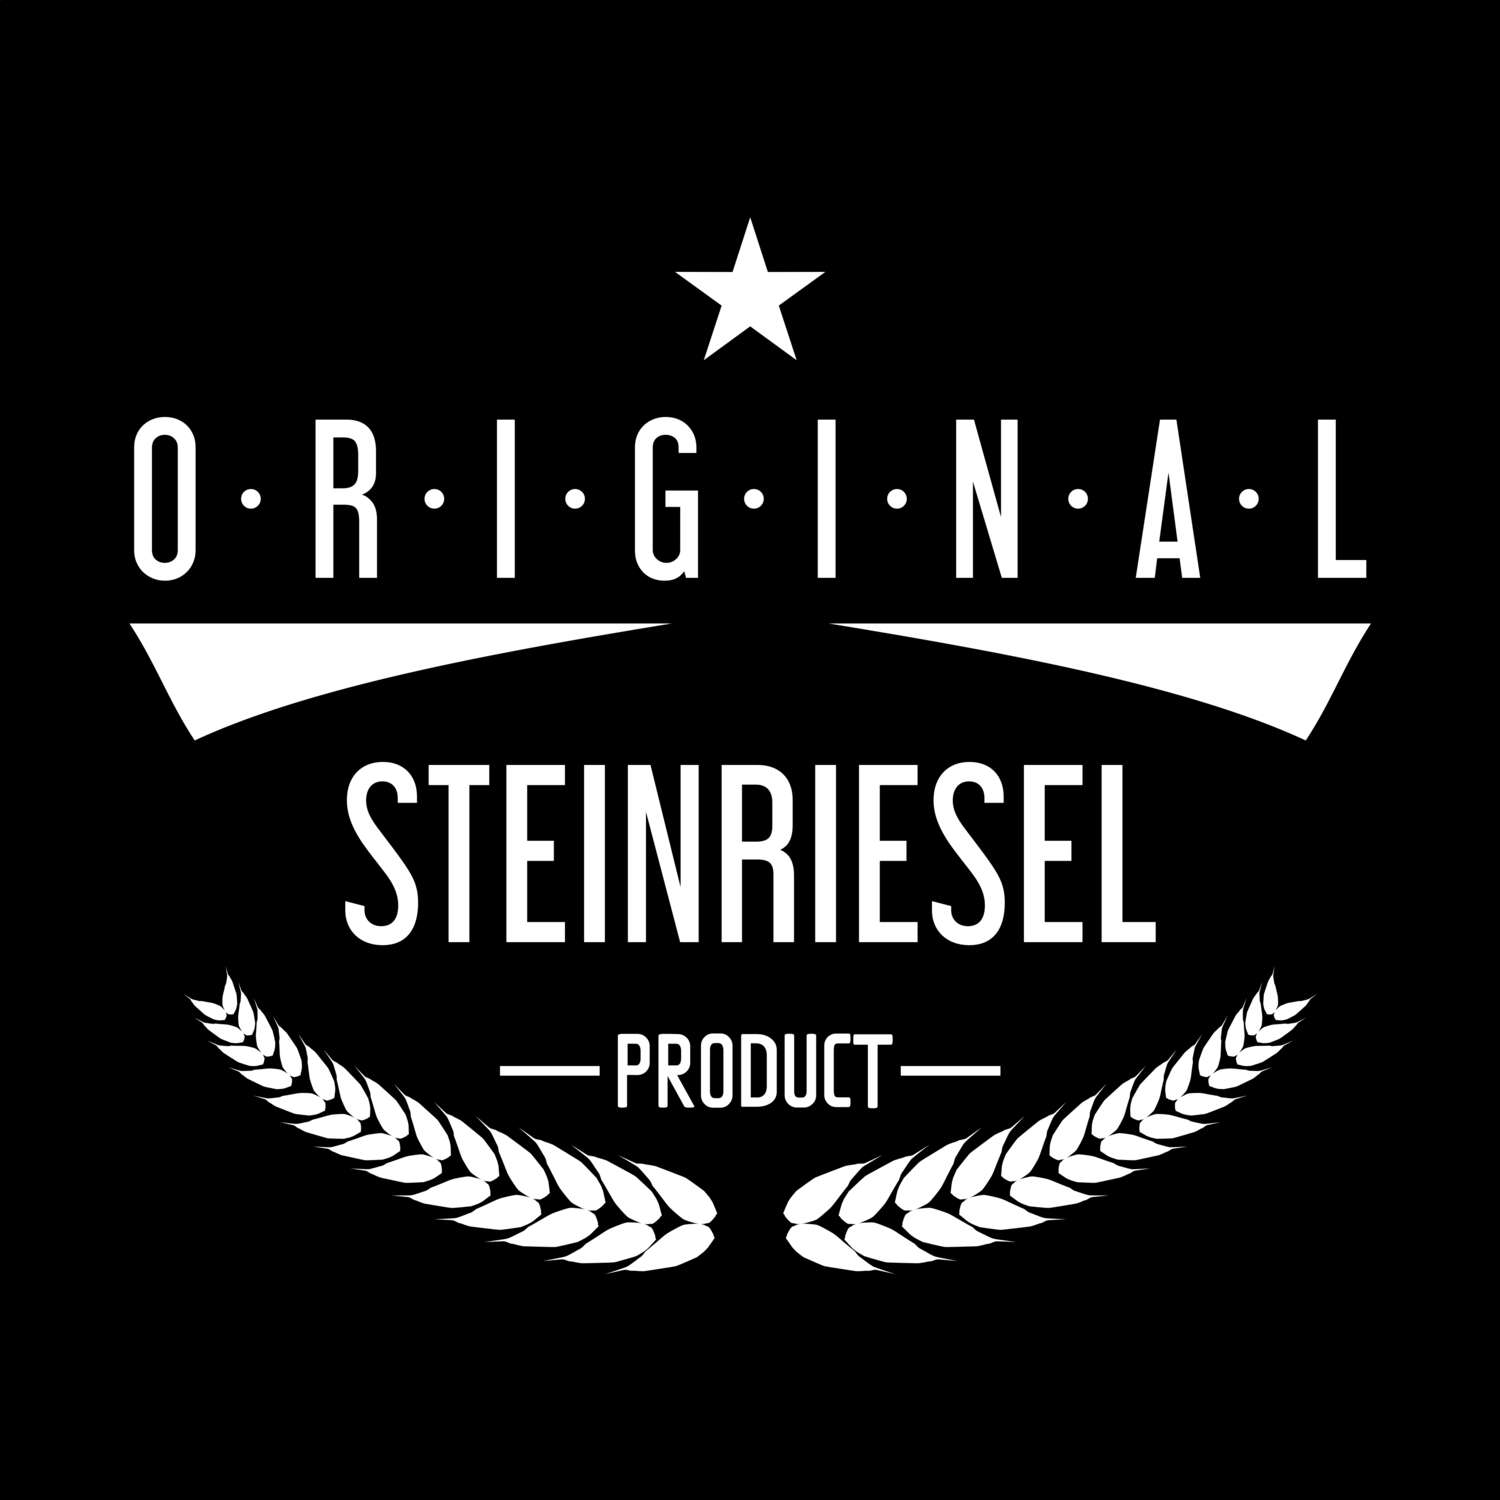 Steinriesel T-Shirt »Original Product«